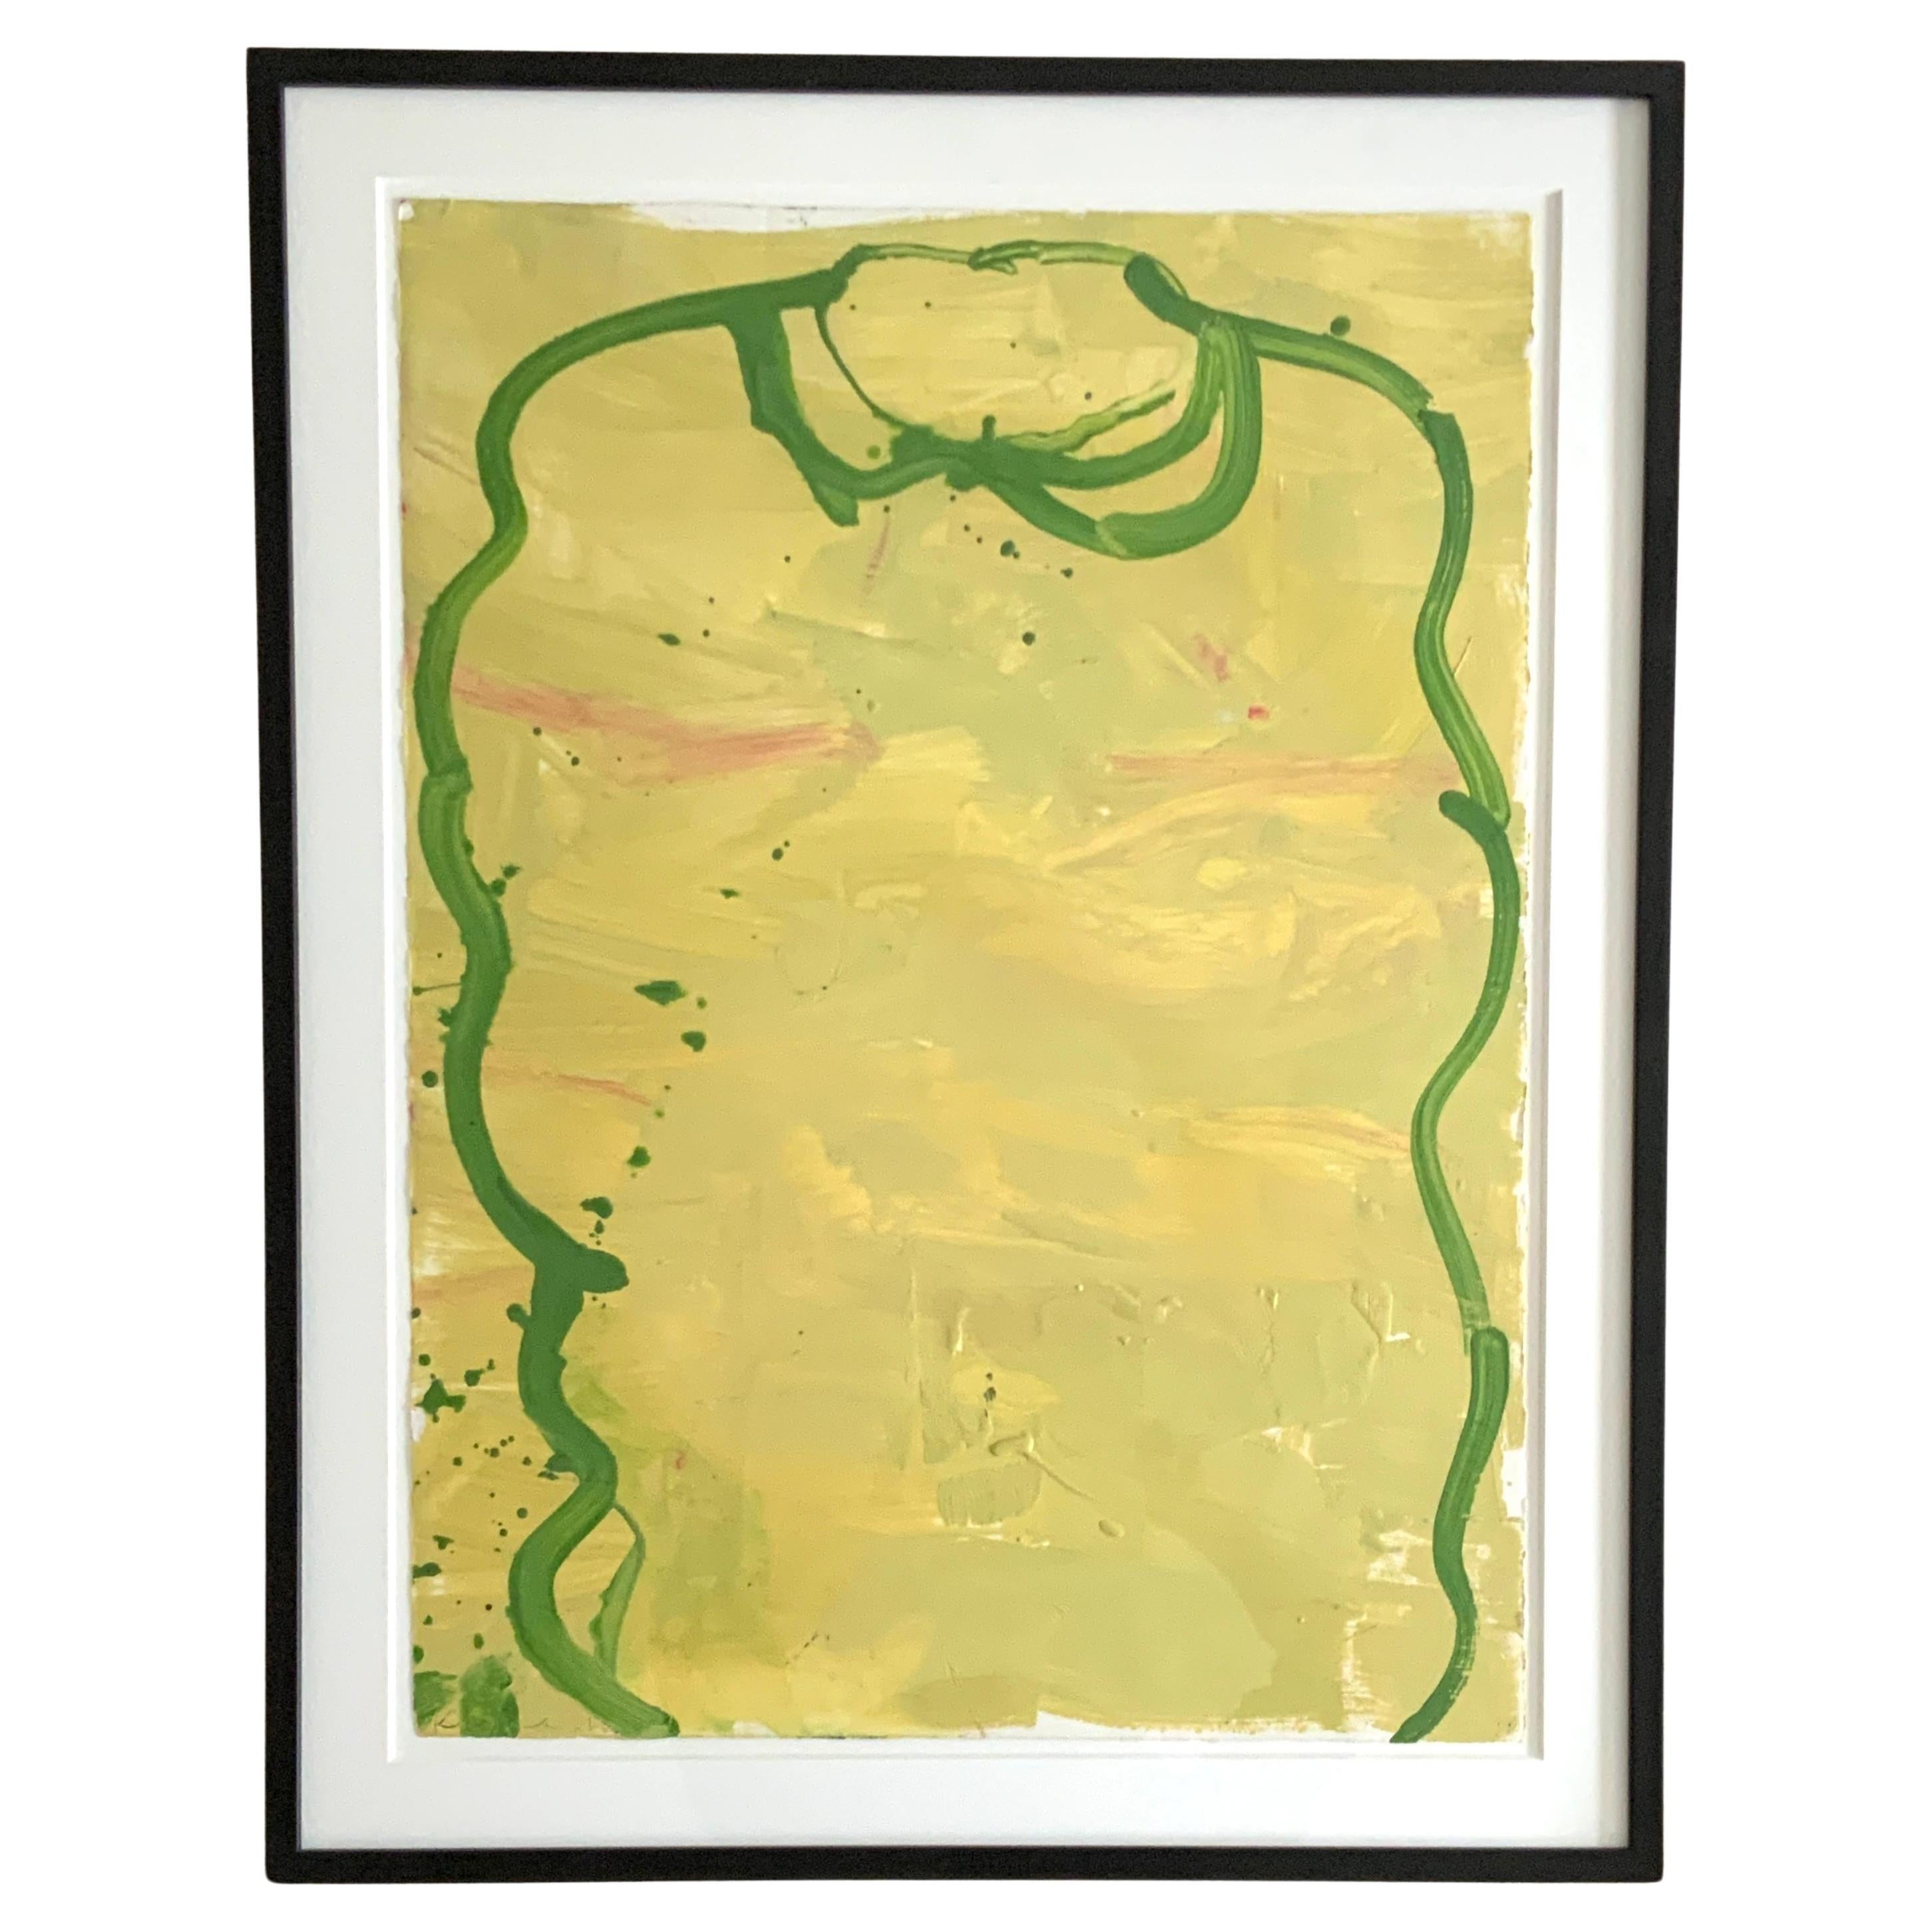 Gary Komarin “Untitled Green Vessel on Yellow Green”, acrylic on paper, 2000